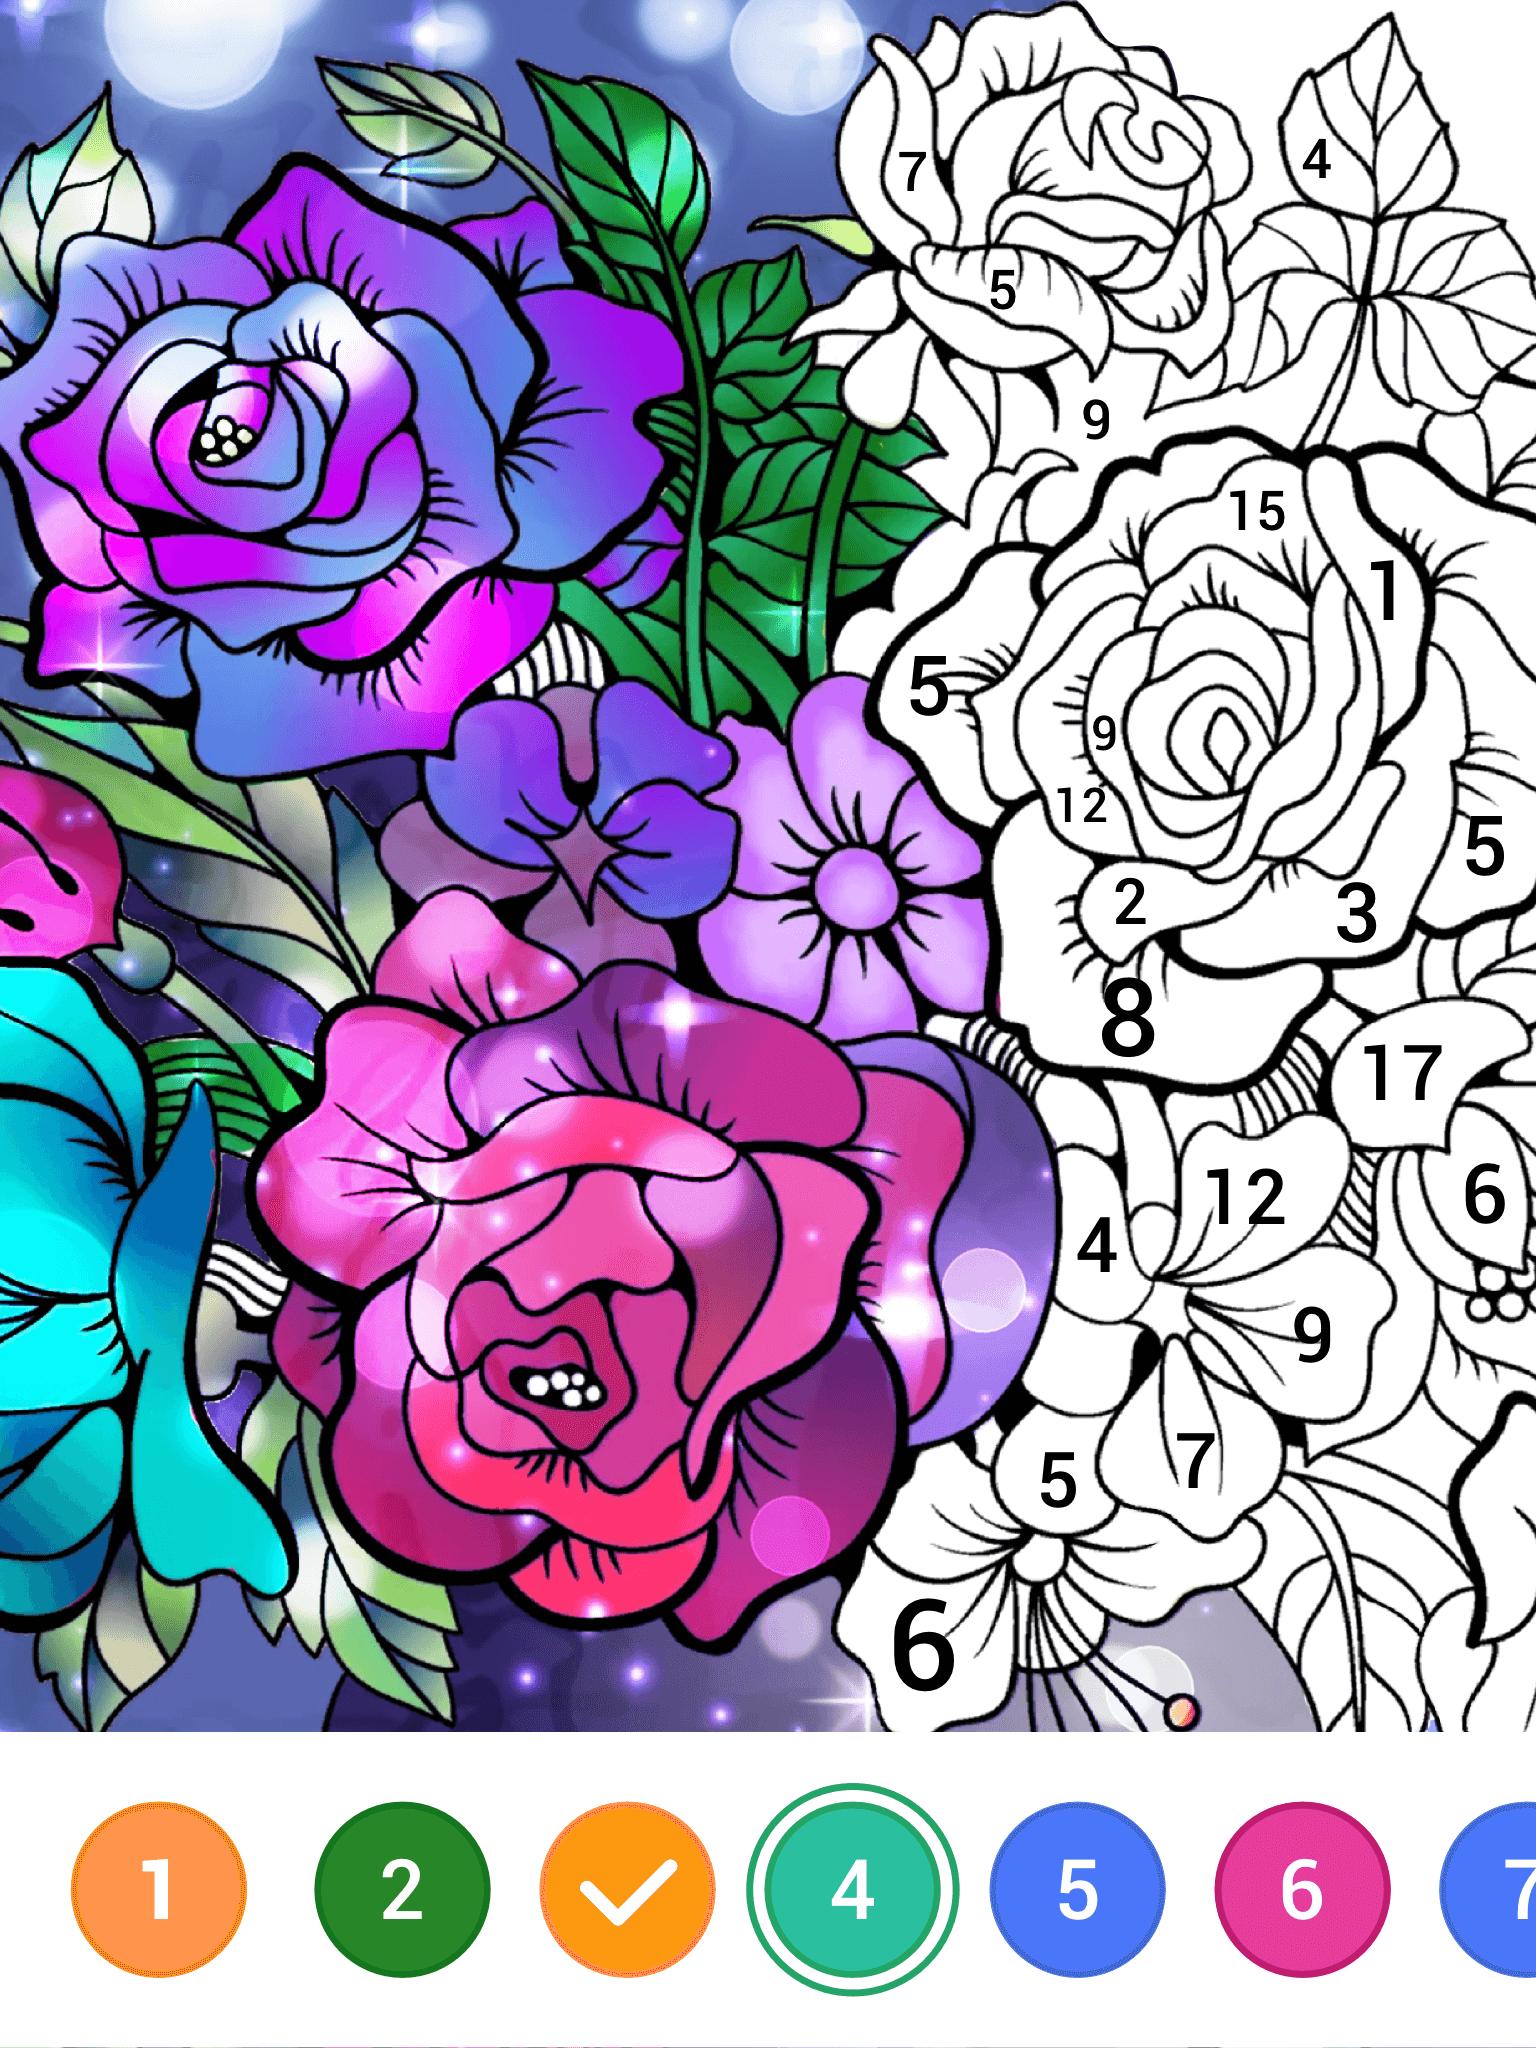 Magic Paint Color by number & Pixel Art 0.9.23 Screenshot 10